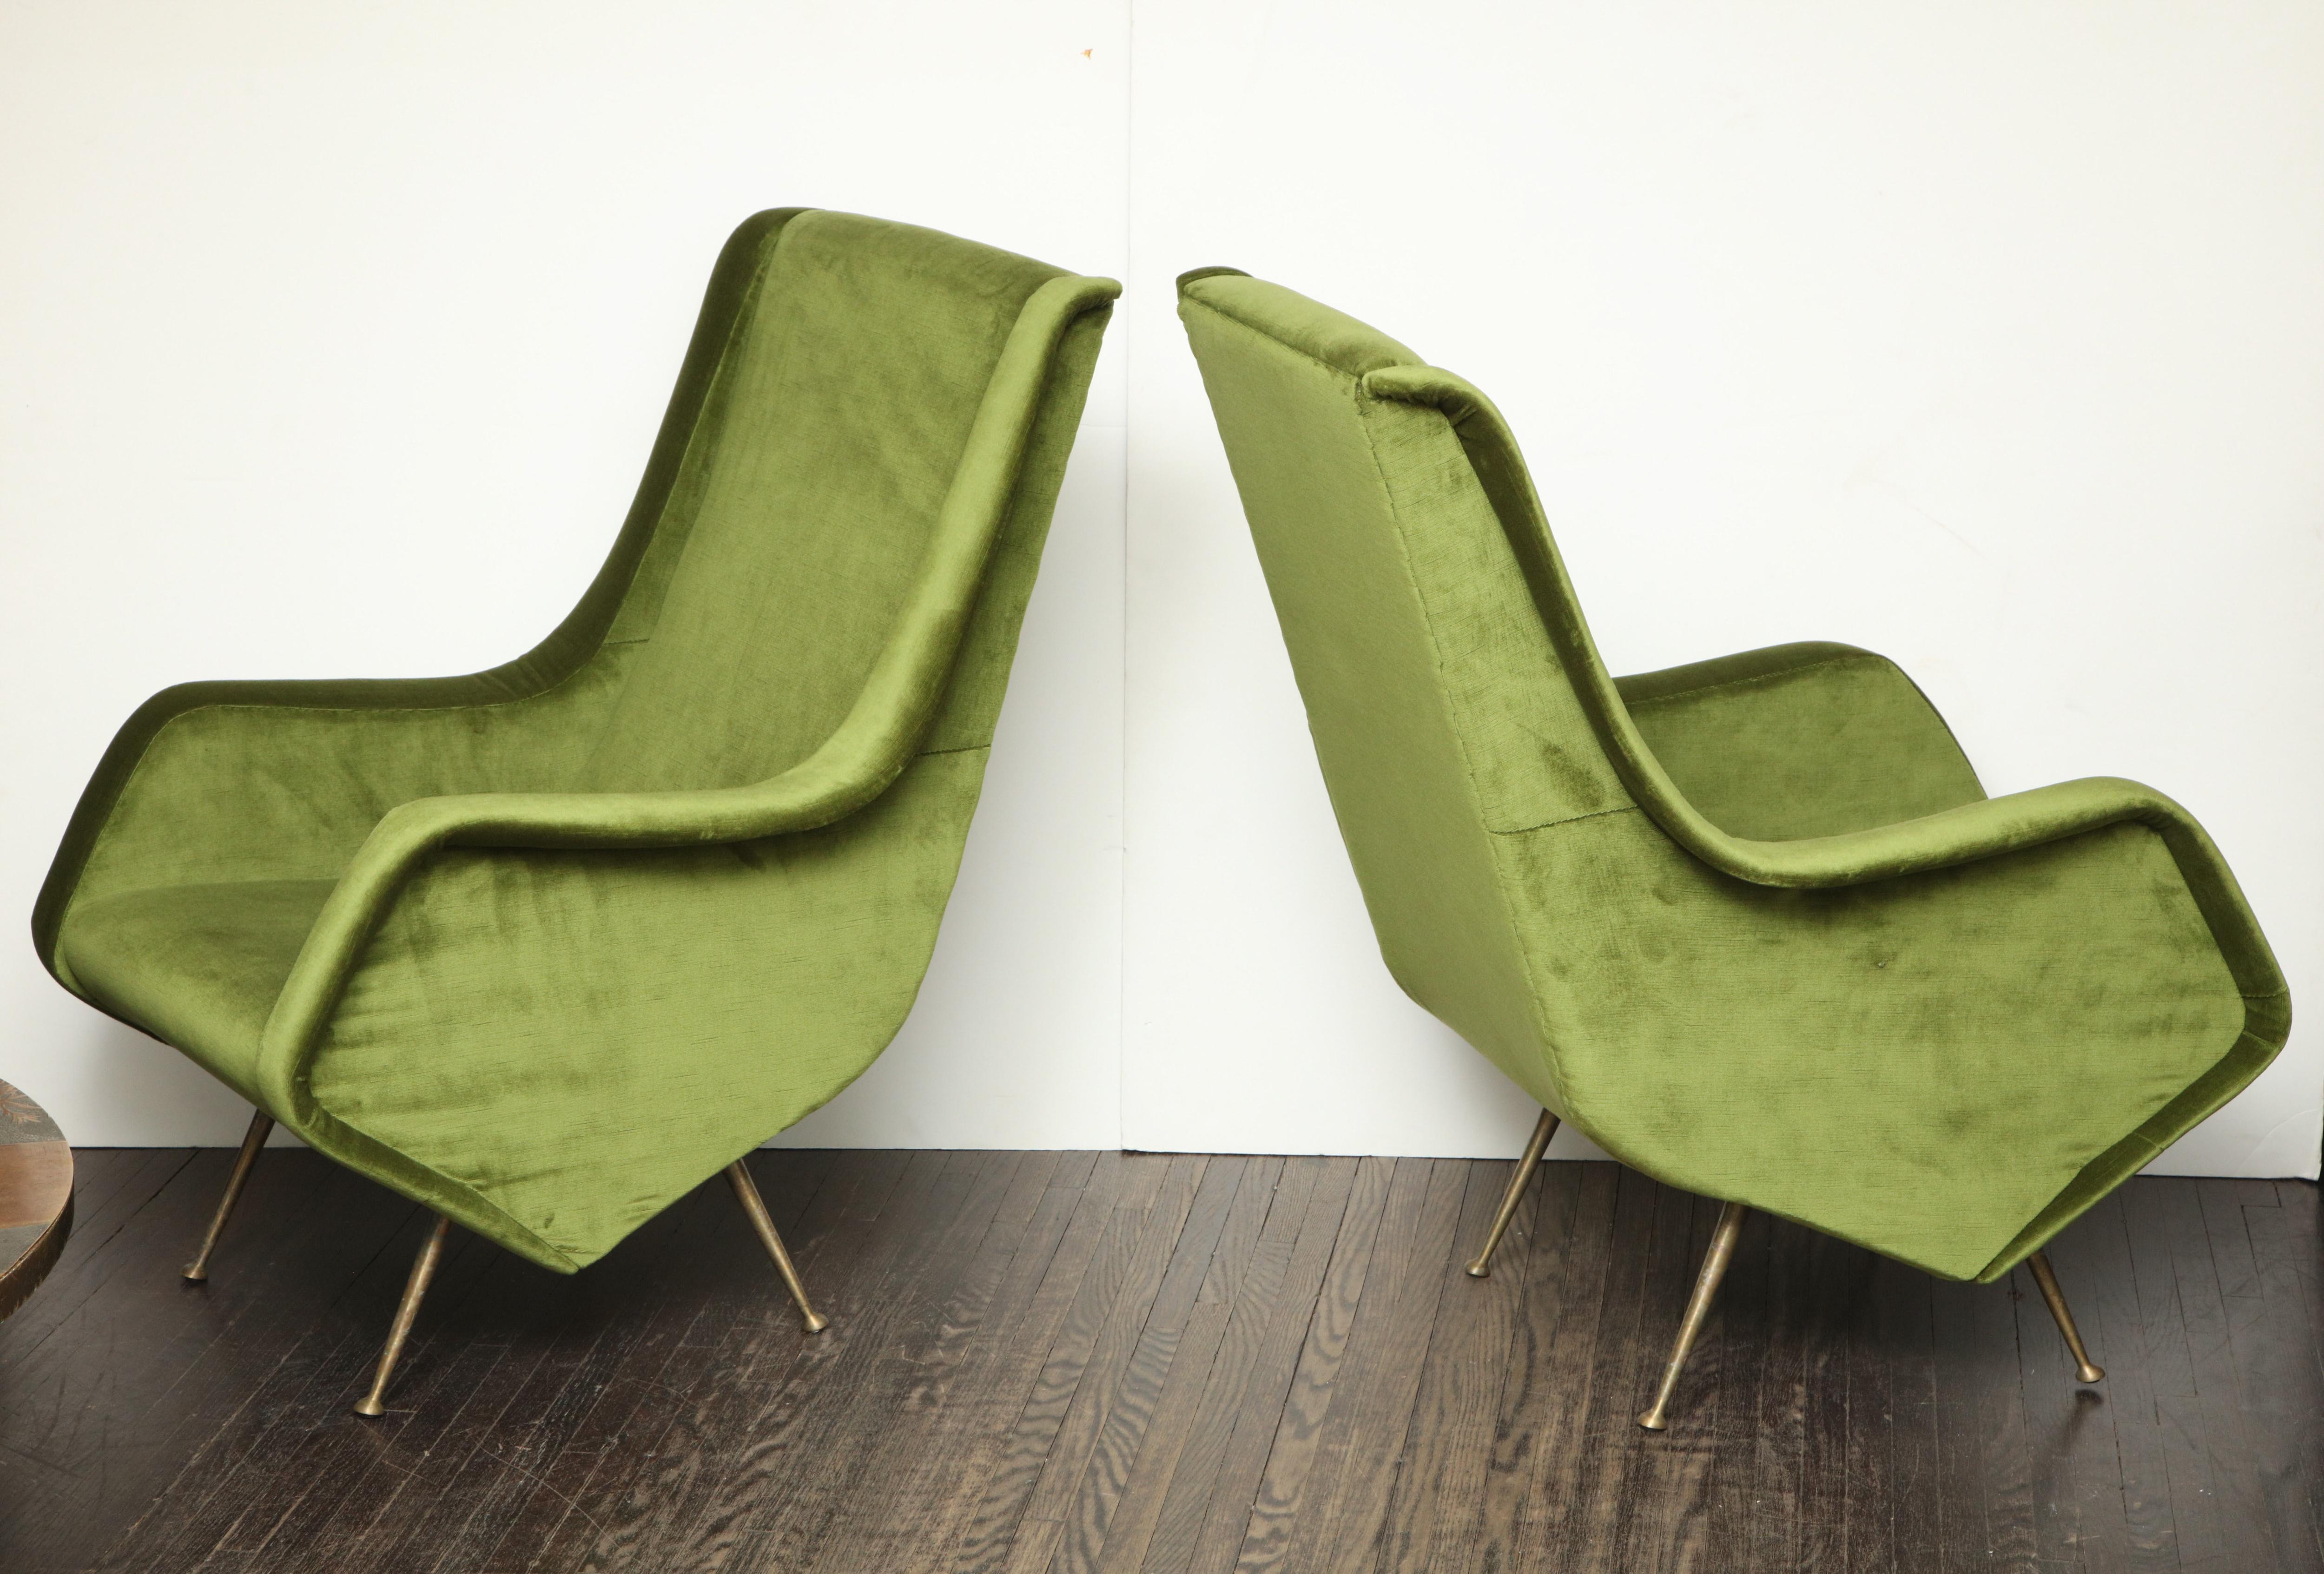 Pair of Marco Zanuso armchair in green velvet

COM upholstery option available.